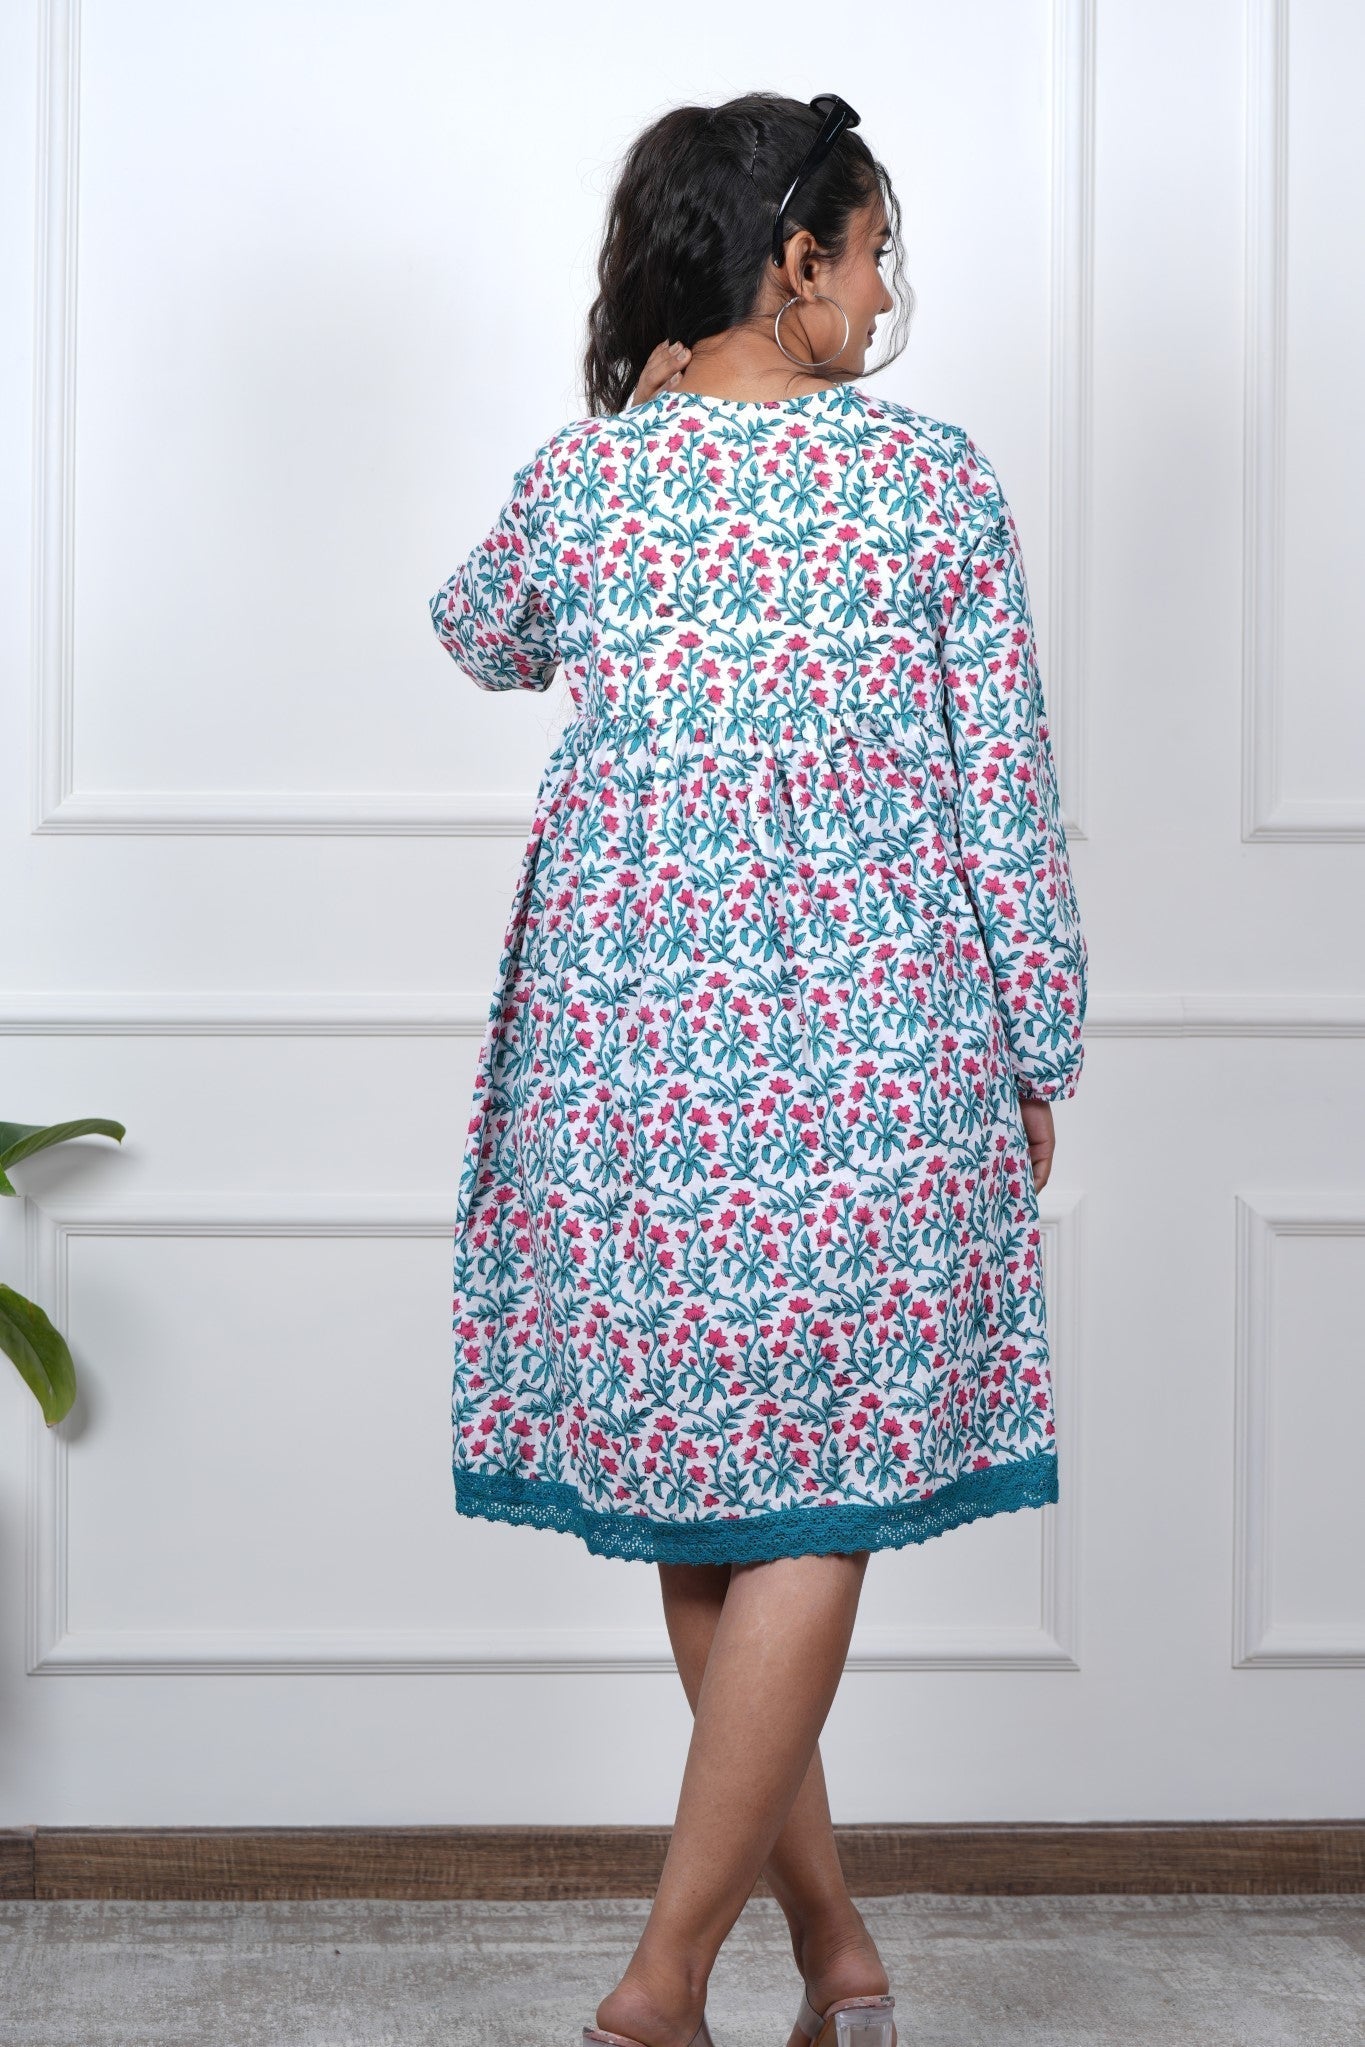 Jasmine Joy Hand Block Printed Dress - SootiSyahi